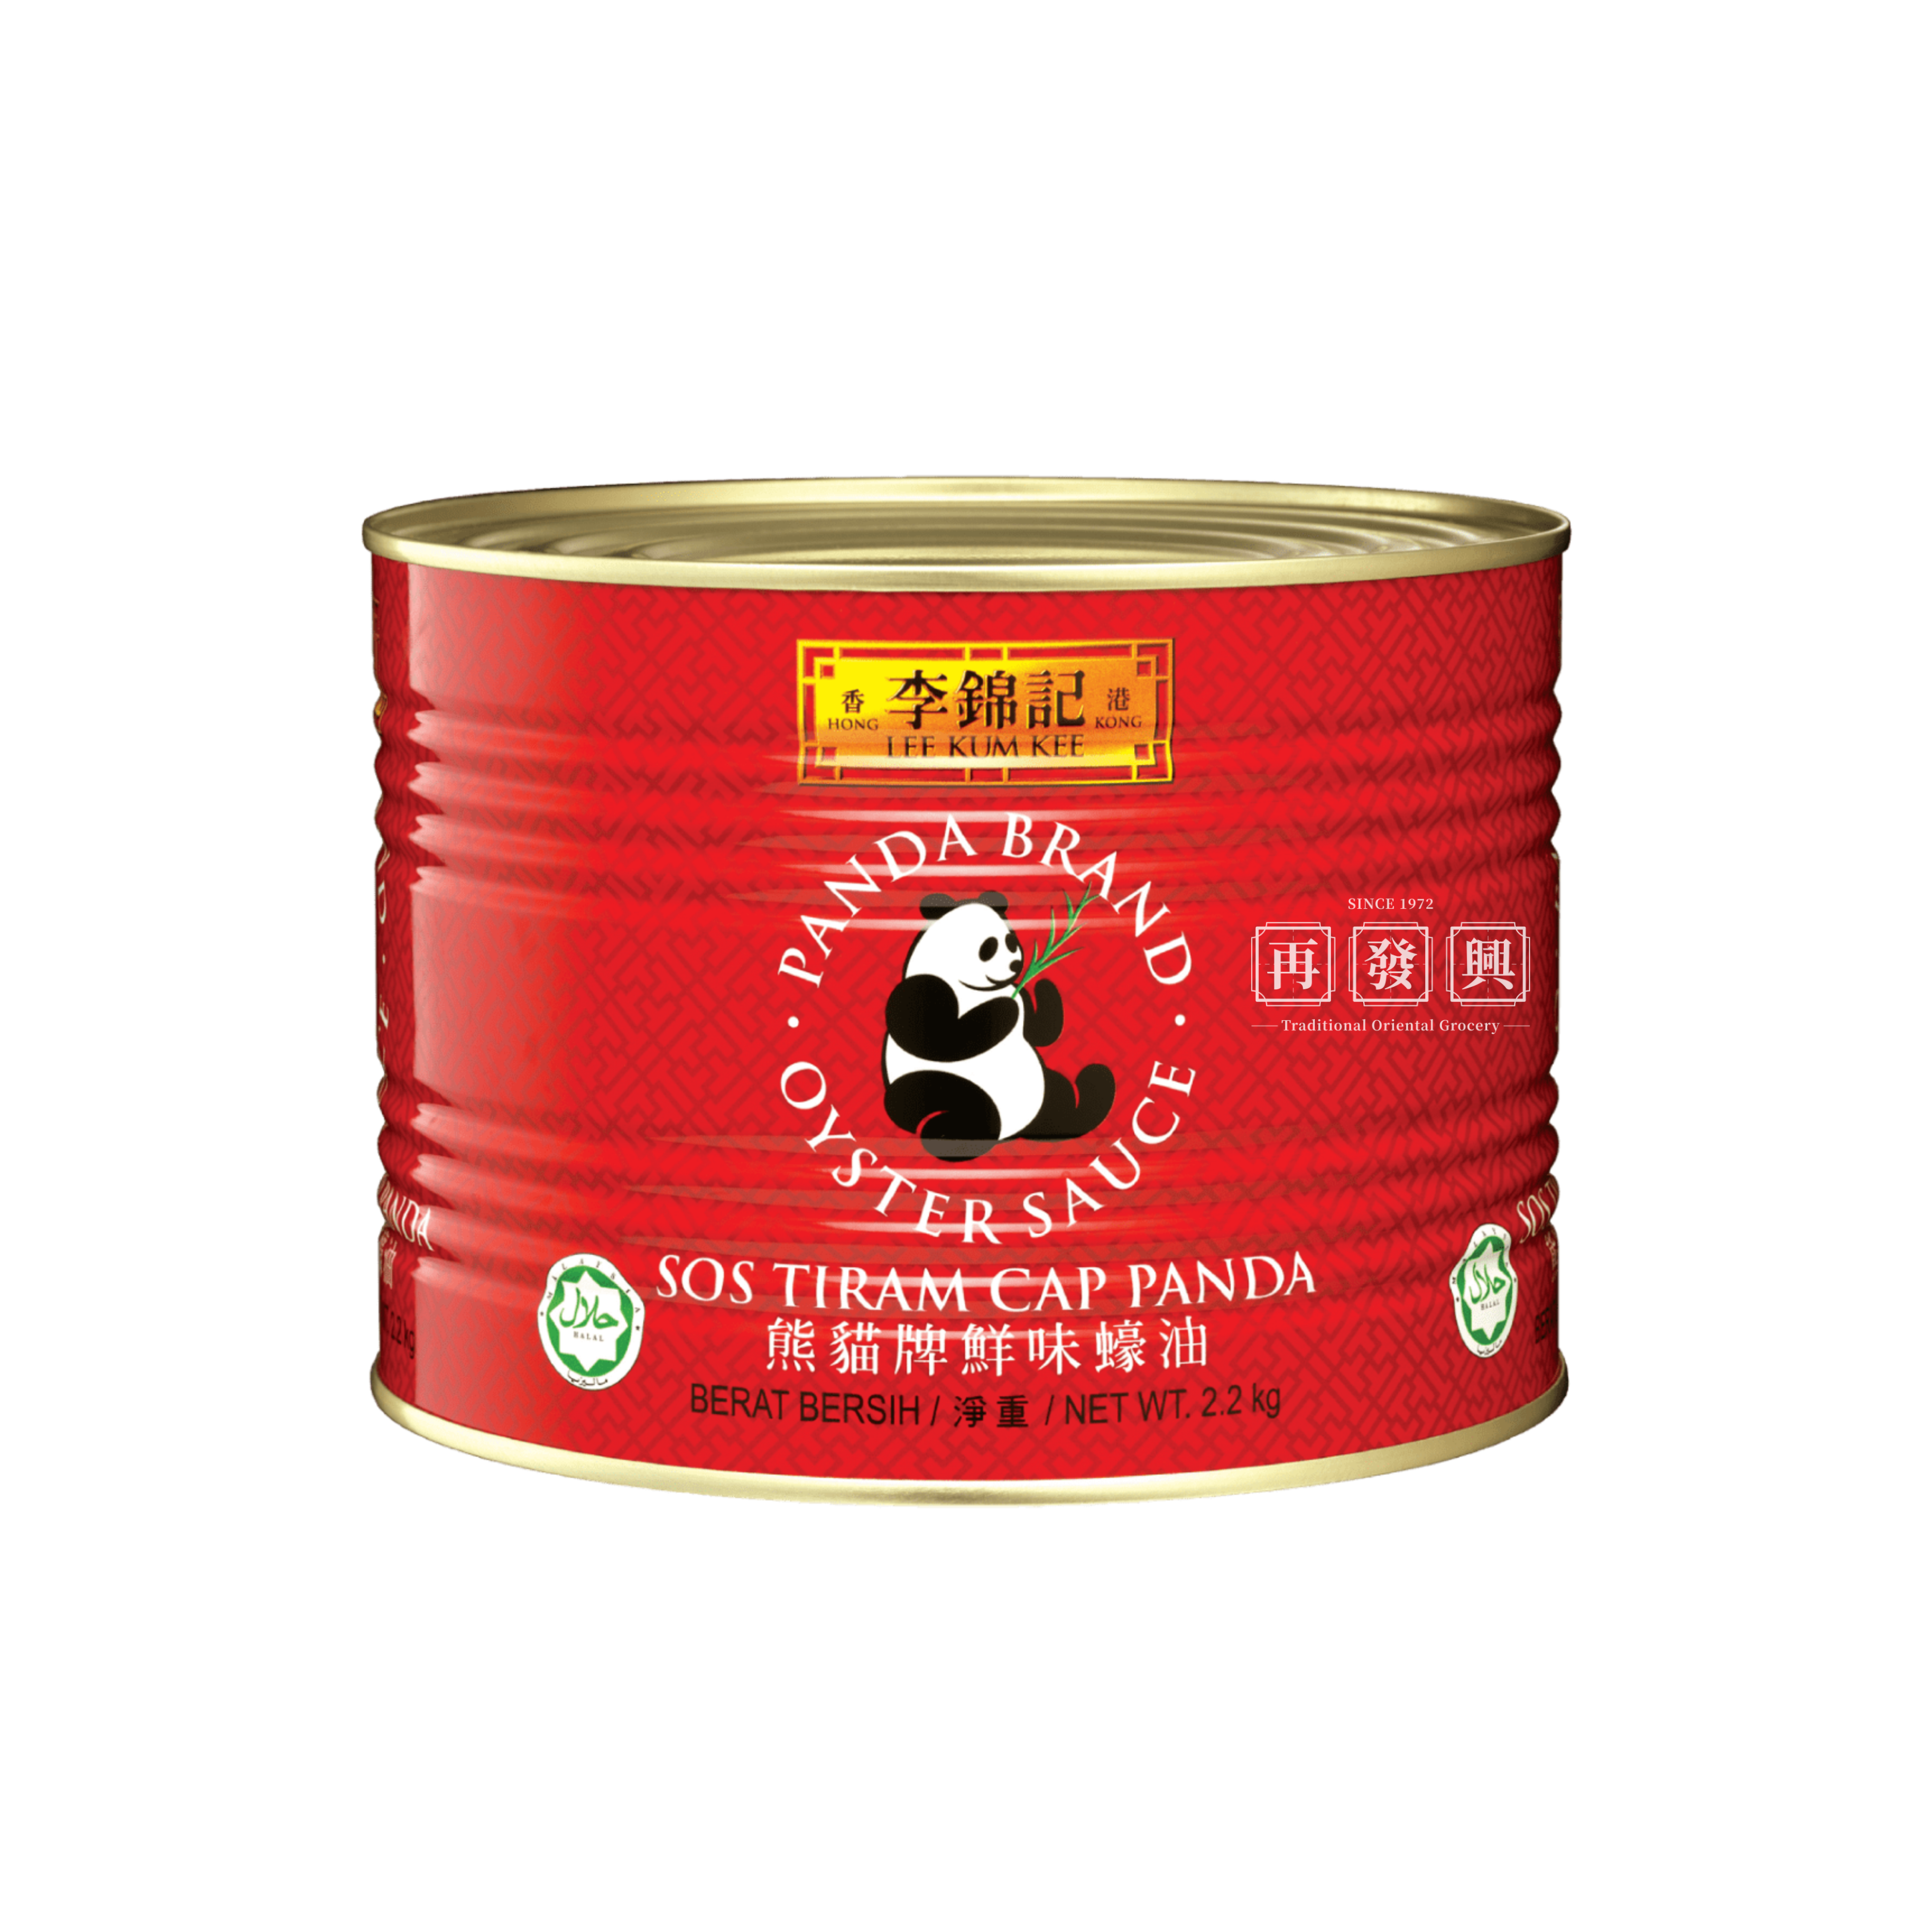 LKK Panda Oyster Sauce 2.2kg